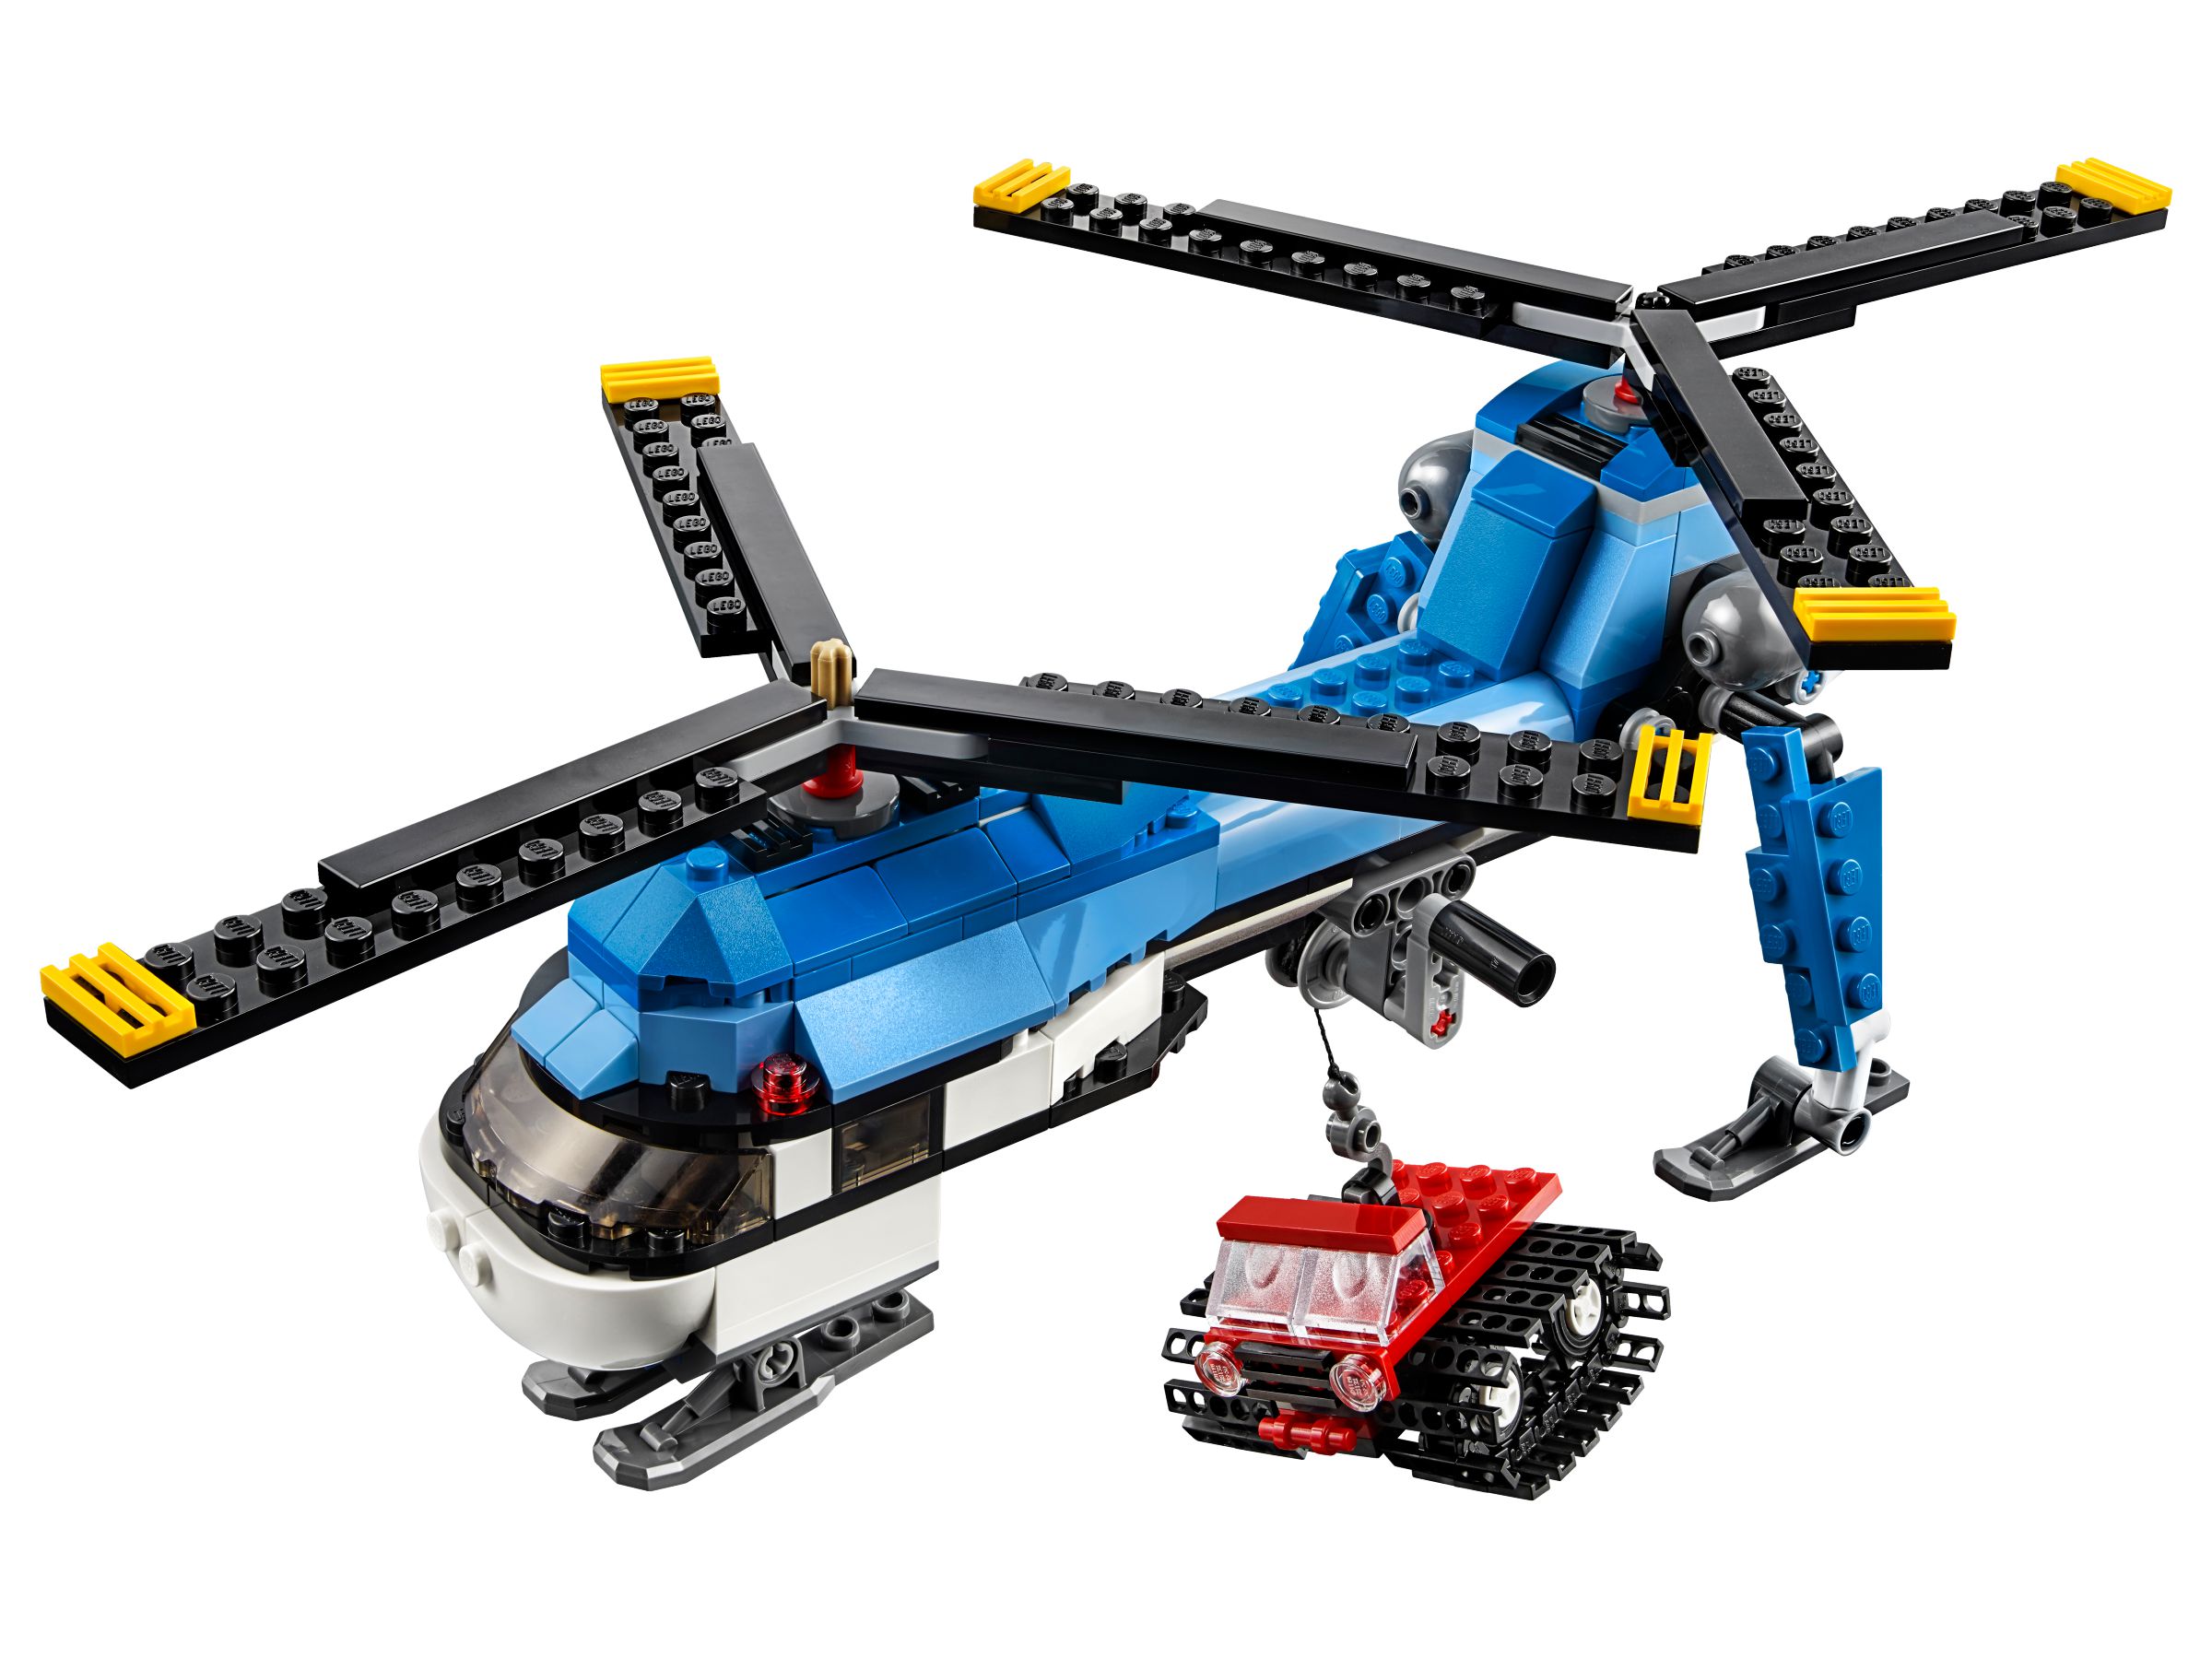 LEGO Creator 31049 Doppelrotor-Hubschrauber LEGO_31049_alt2.jpg